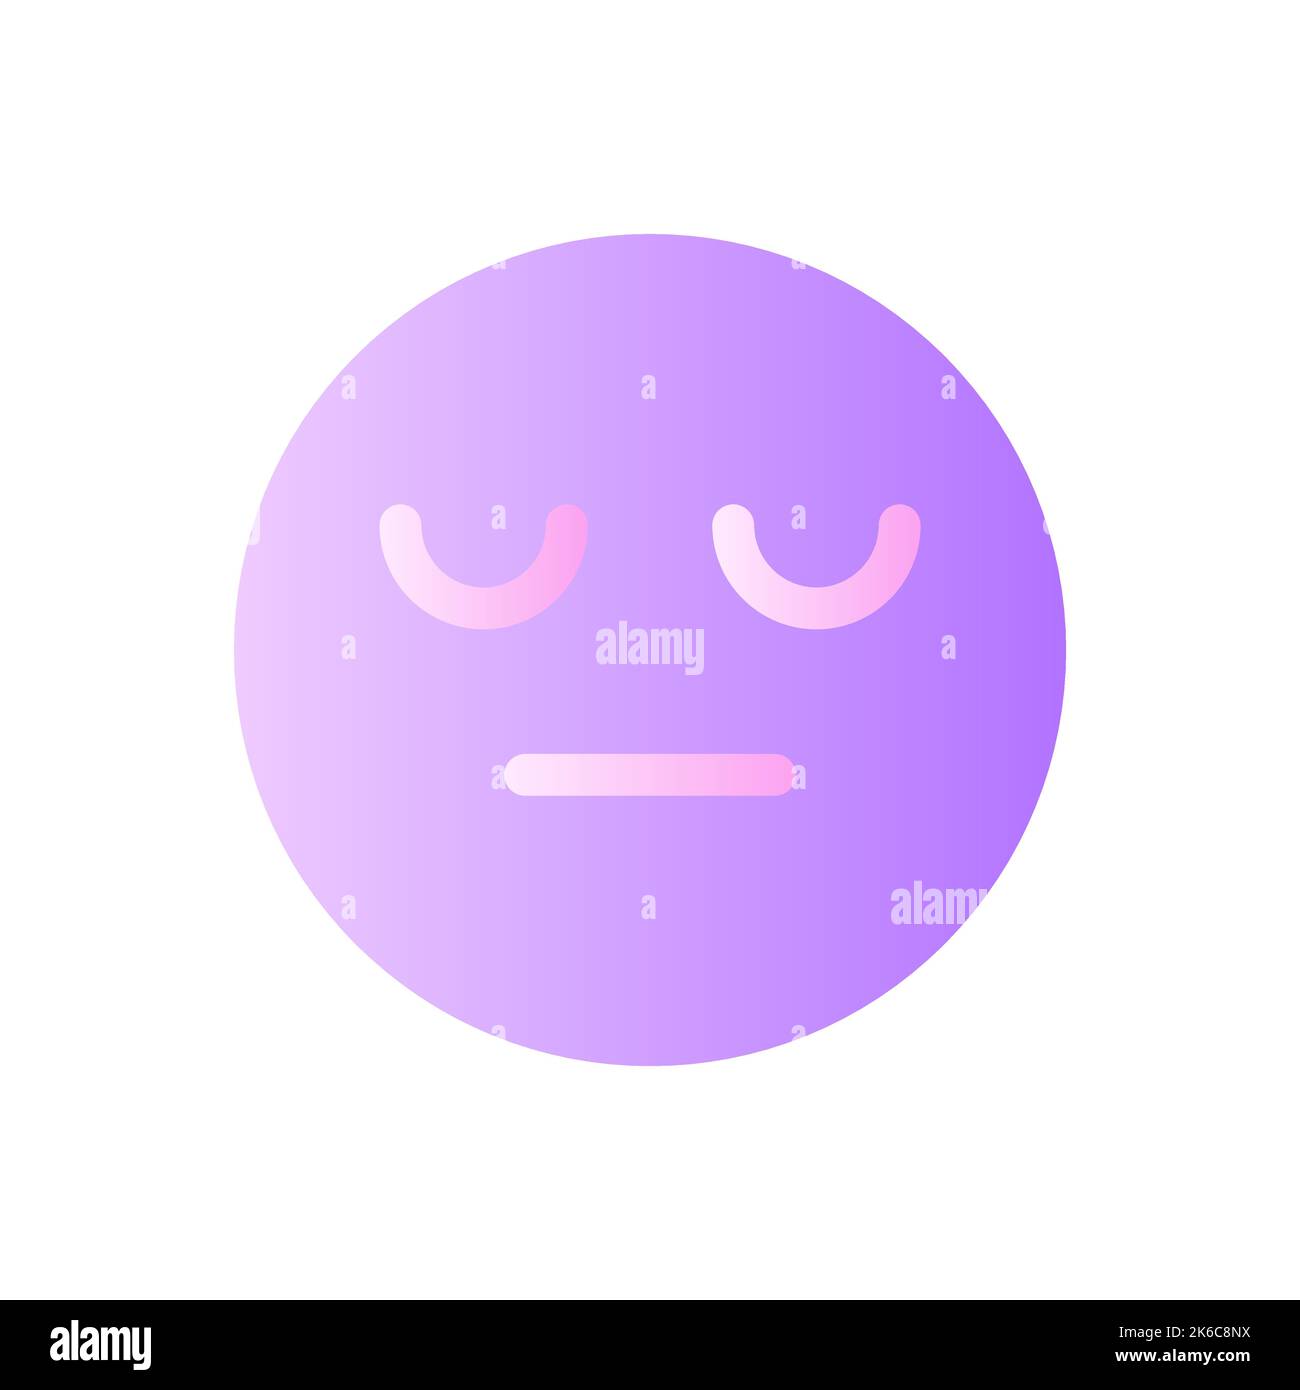 Unamused Face Emojis Stickers for Sale